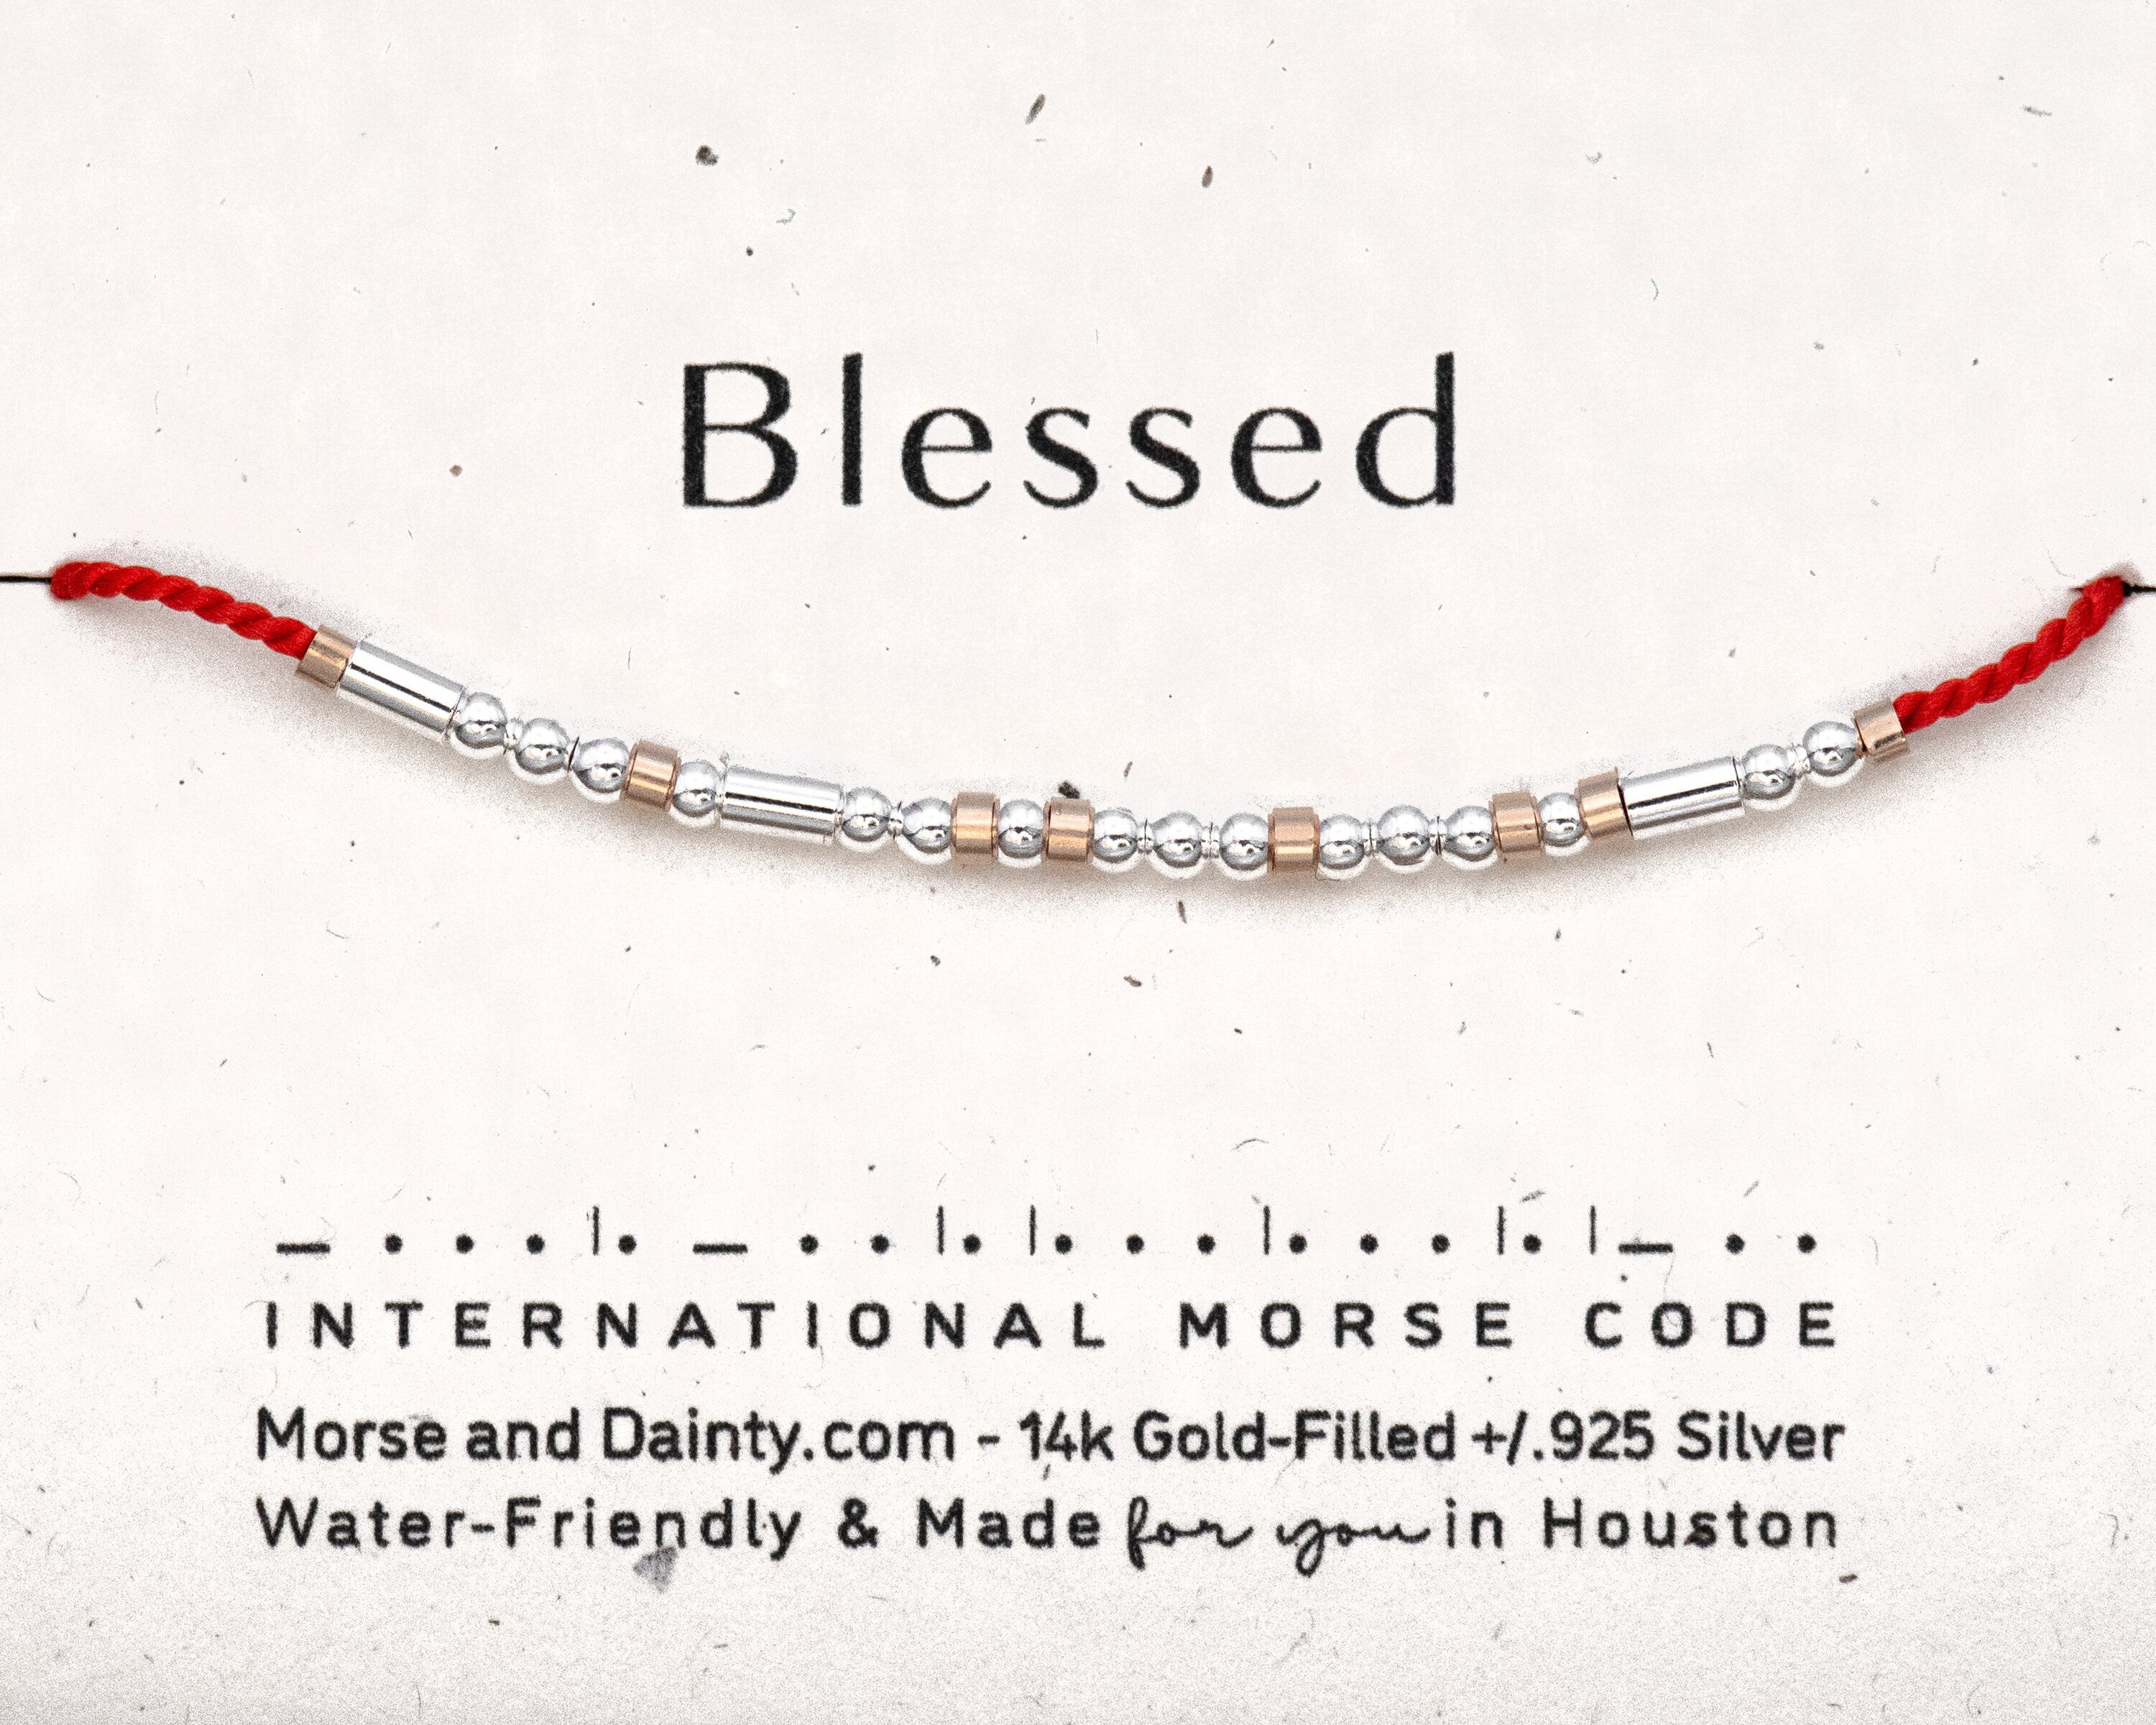 Blessed Morse Code Bracelet on Red Cord